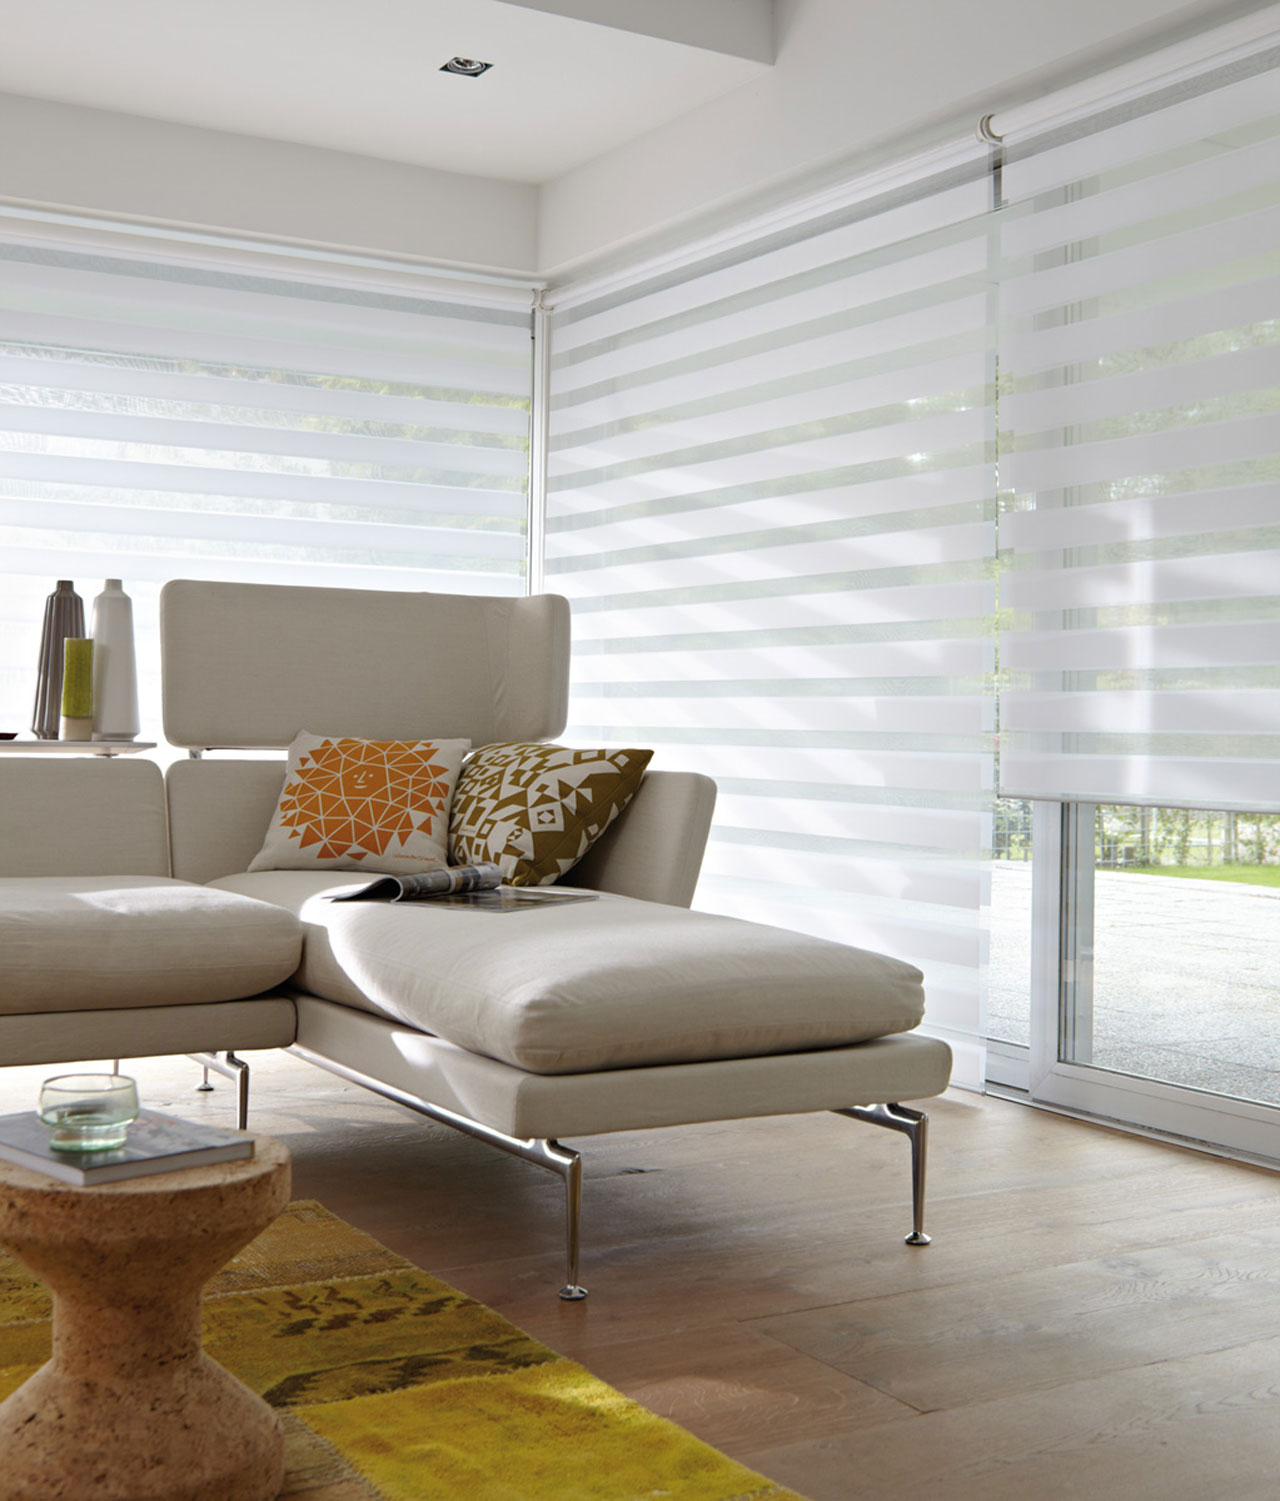 custom blinds from Luxaflex